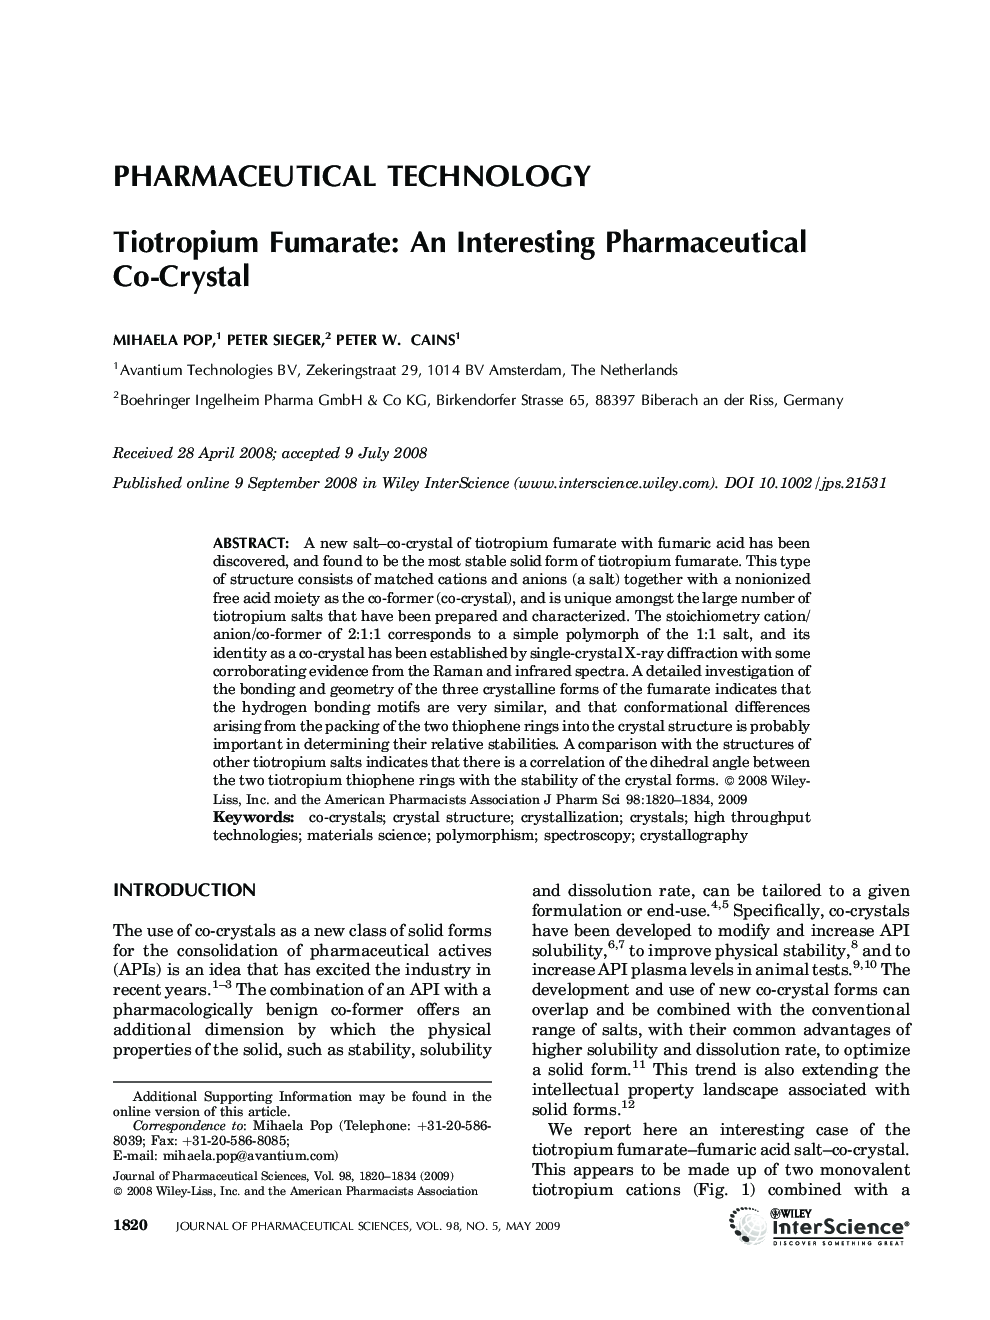 Tiotropium Fumarate: An Interesting Pharmaceutical Co-Crystal